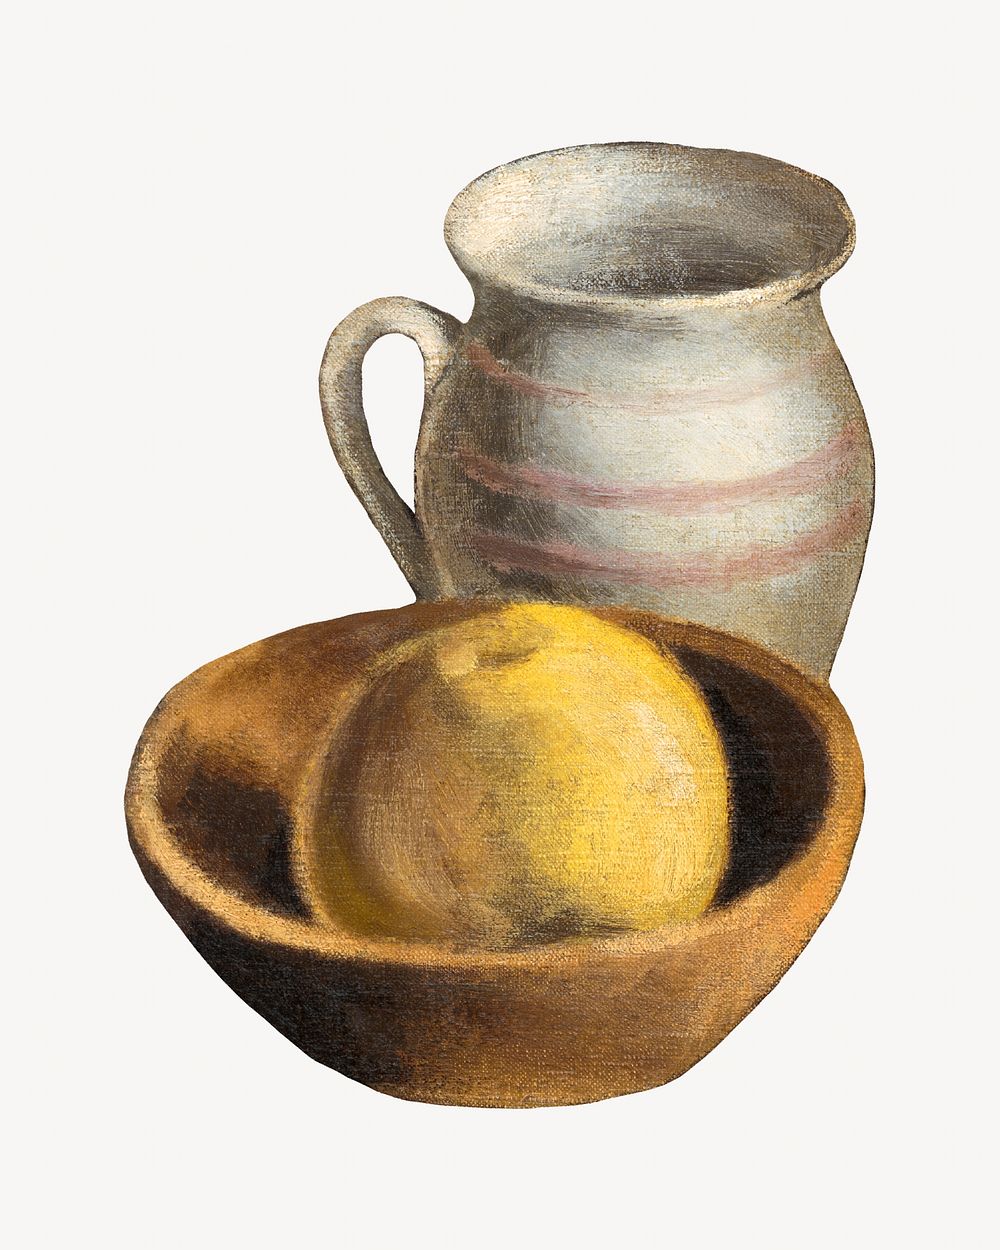 Apple pot still life, vintage illustration by Mikulas Galanda. Remixed by rawpixel.